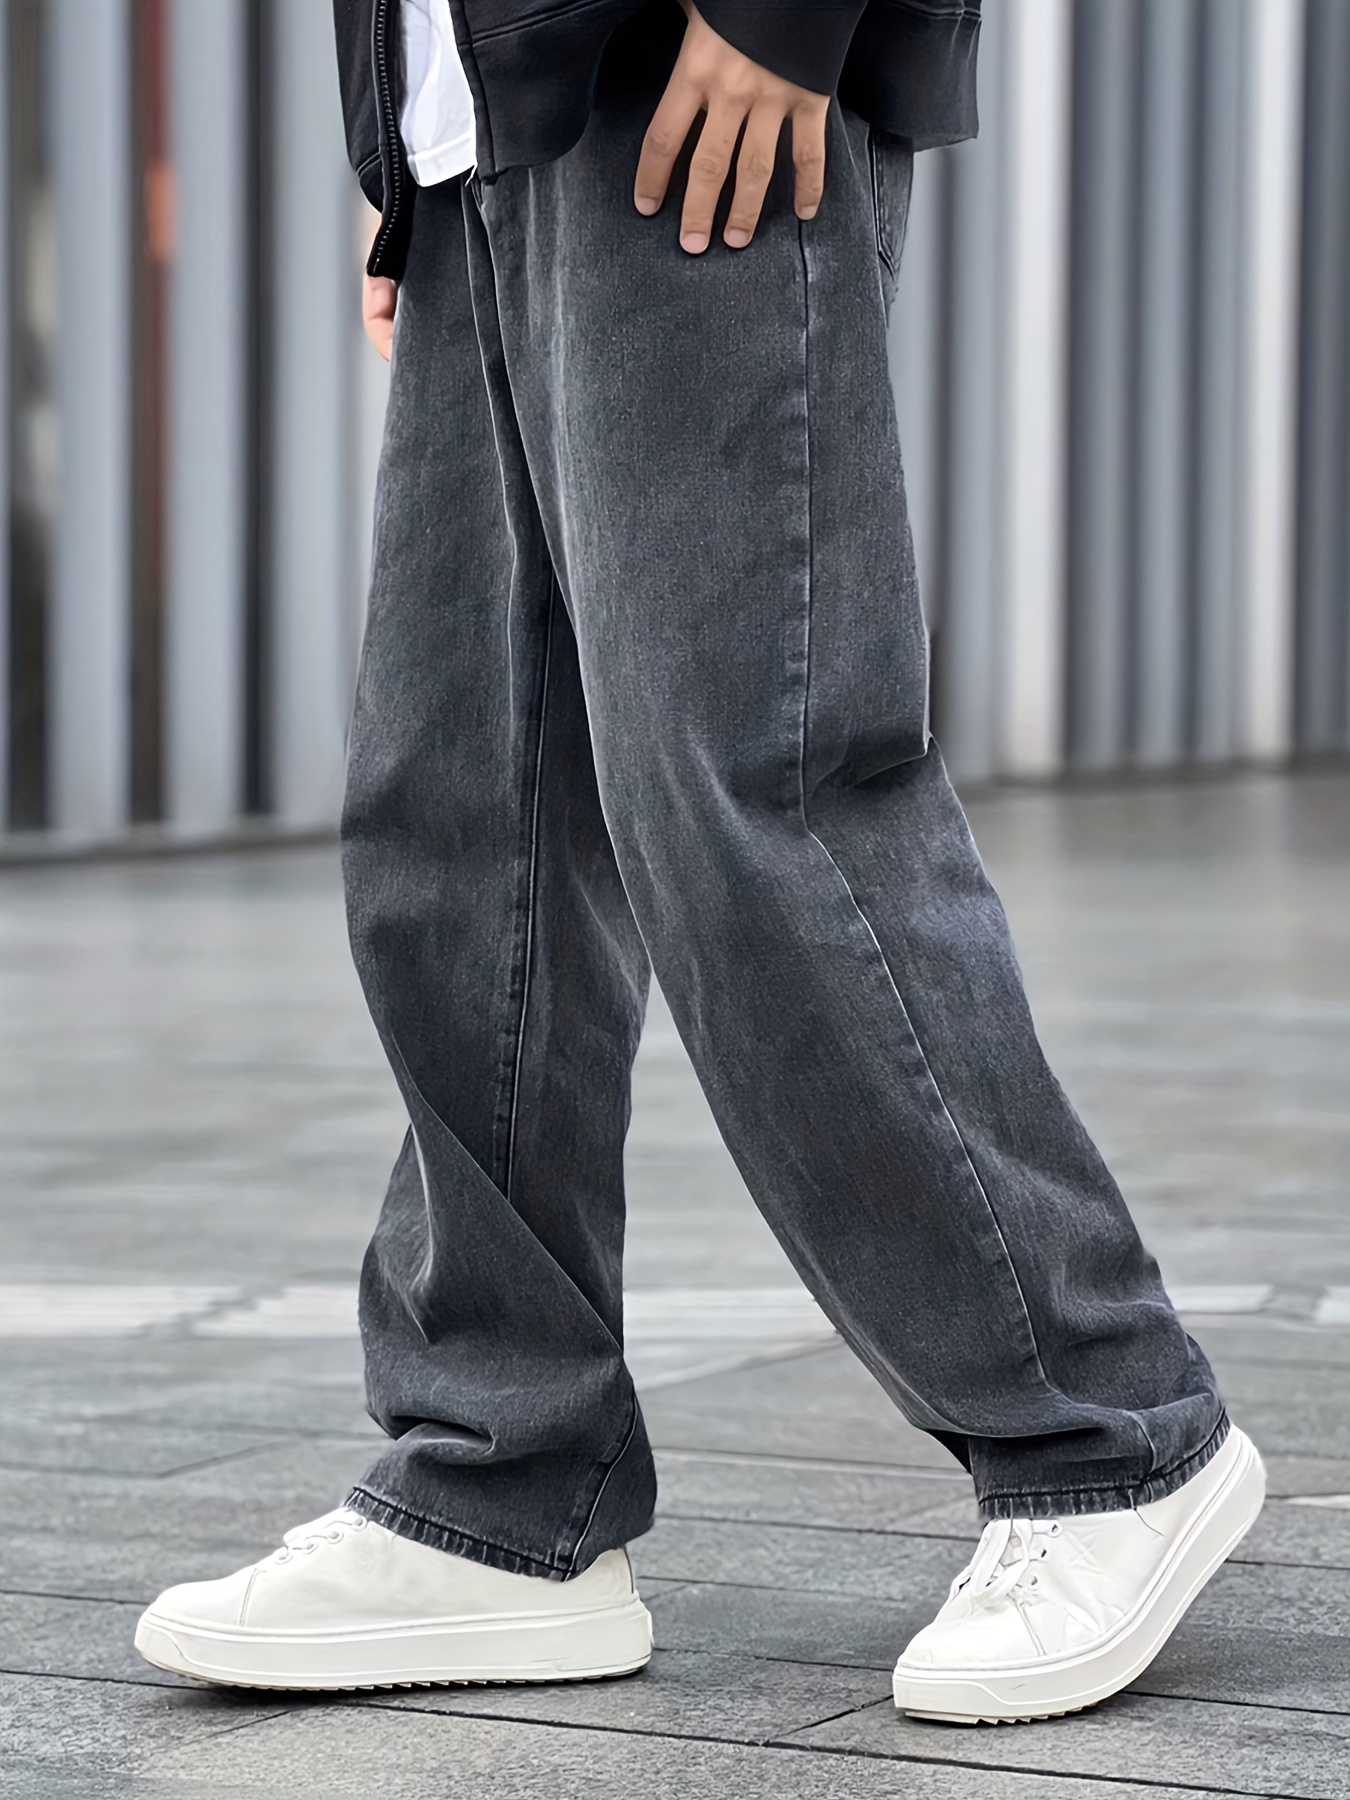 Men's Loose Fit Baggy Jeans, Casual Street Style Comfy Denim Pants